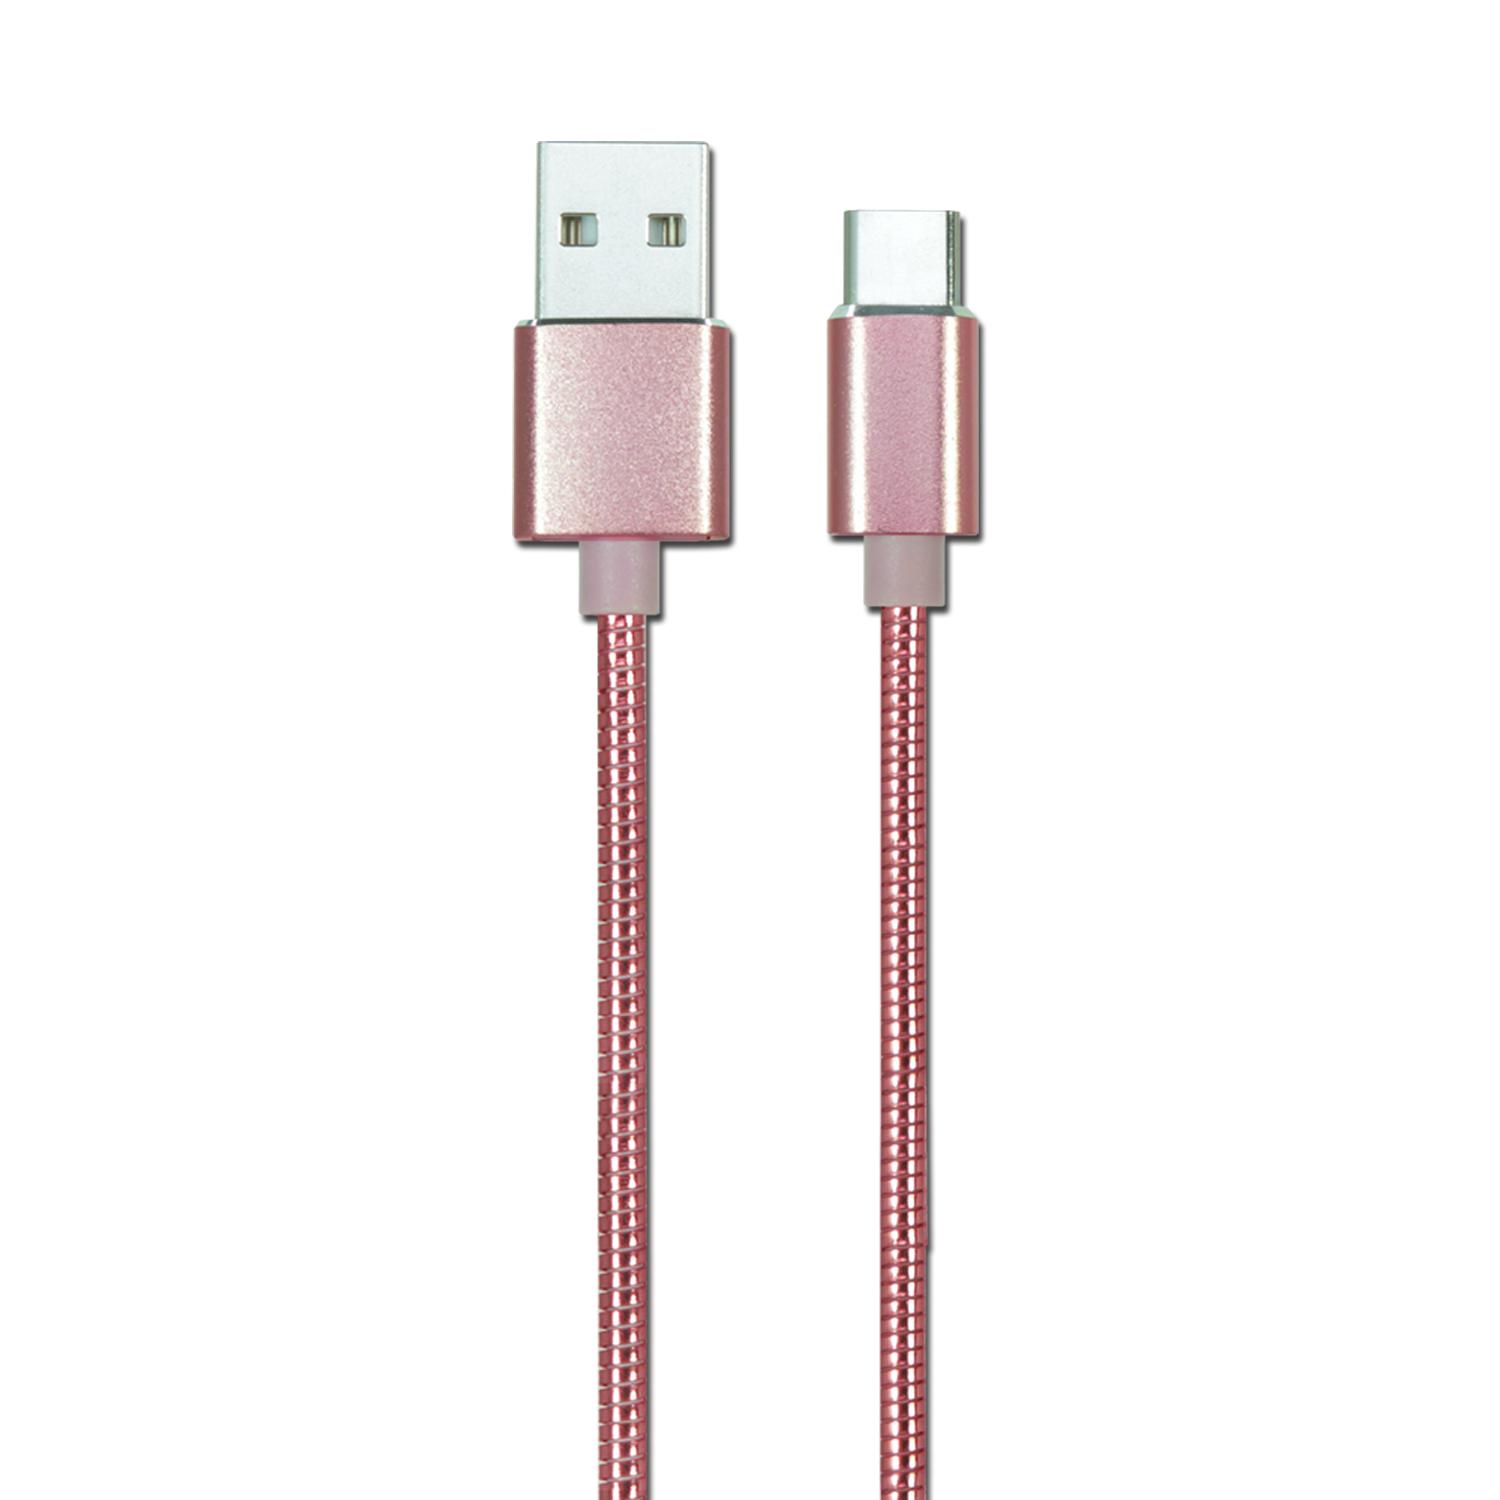 Picture of USB-Datenkabel "Luxury" - rose - 100cm